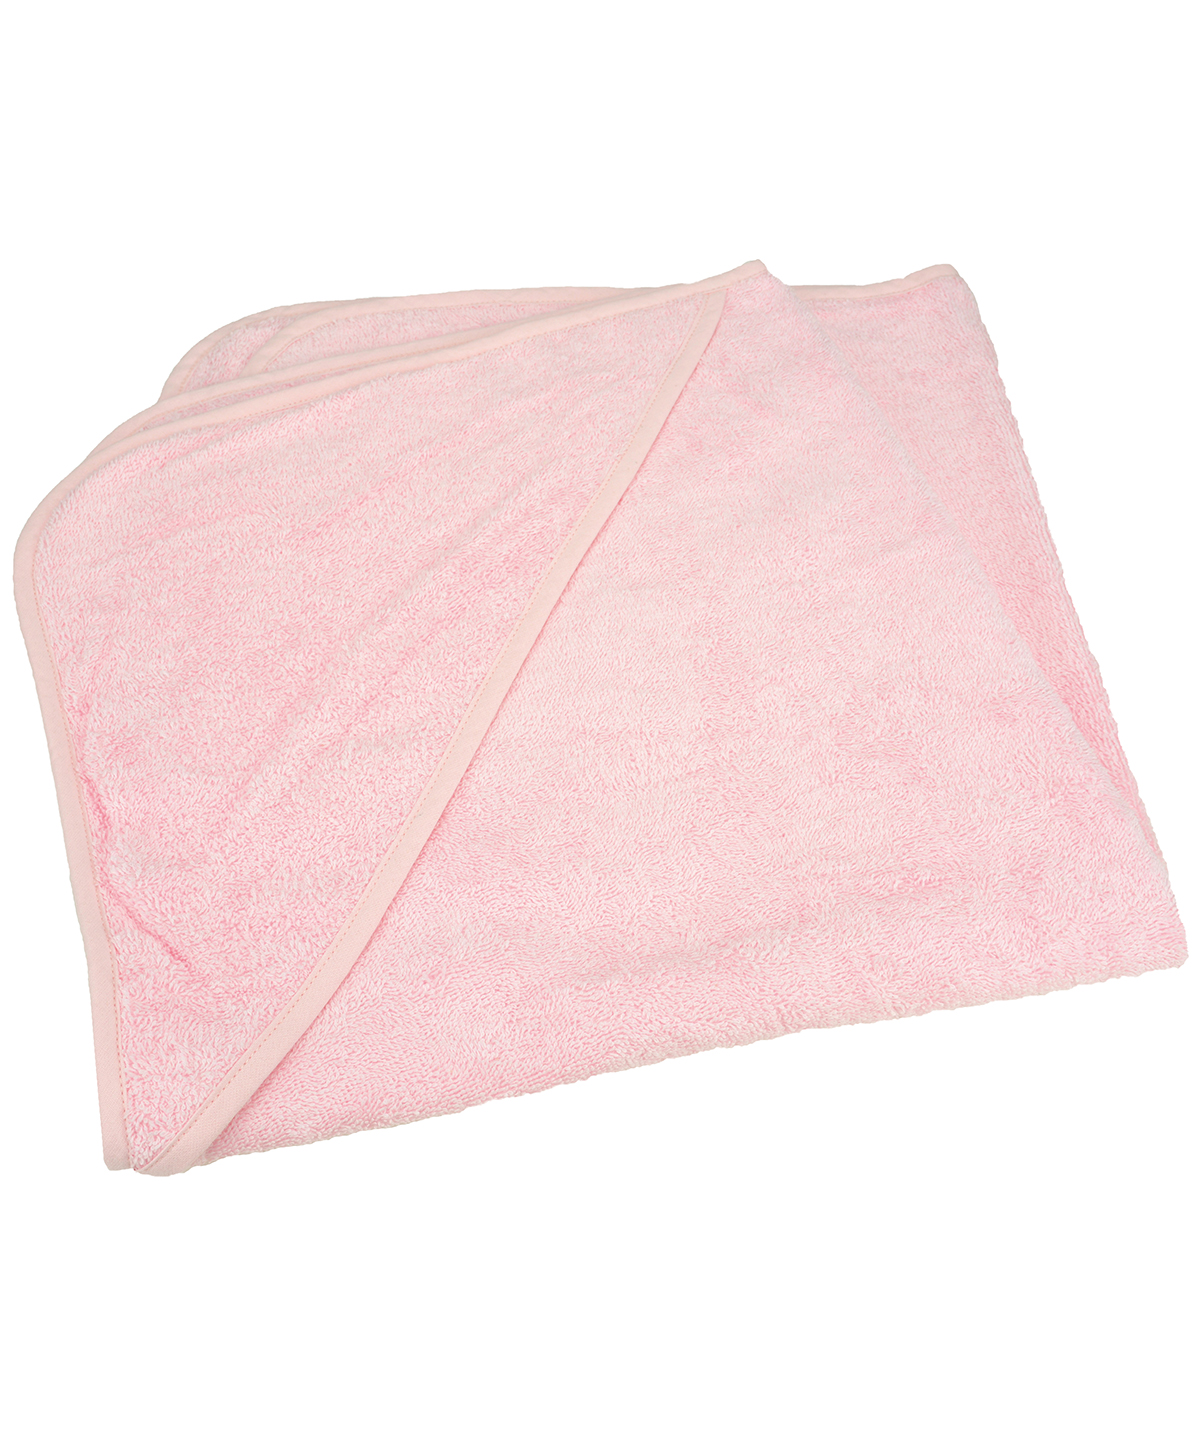 Babiezz® Medium Baby Hooded Towel Light Pink/Light Pink/Light Pink Size One Size